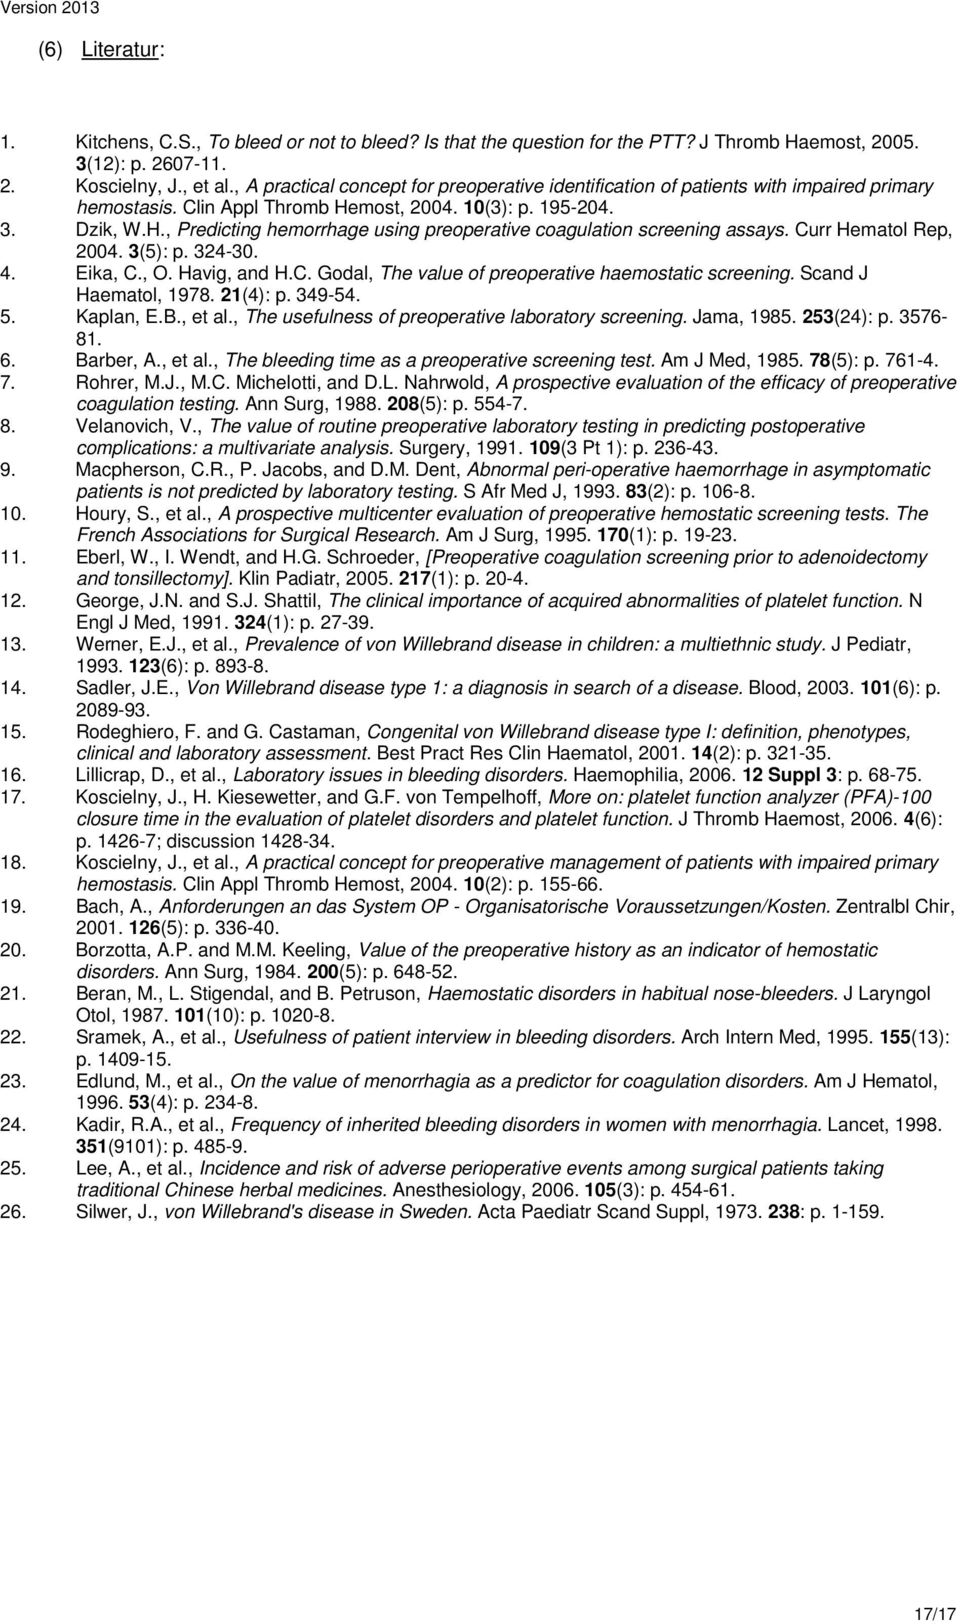 Curr Hematl Rep, 004. 3(5): p. 34-30. 4. Eika, C., O. Havig, and H.C. Gdal, The value f preperative haemstatic screening. Scand Haematl, 1978. 1(4): p. 349-54. 5. Kaplan, E.B., et al.